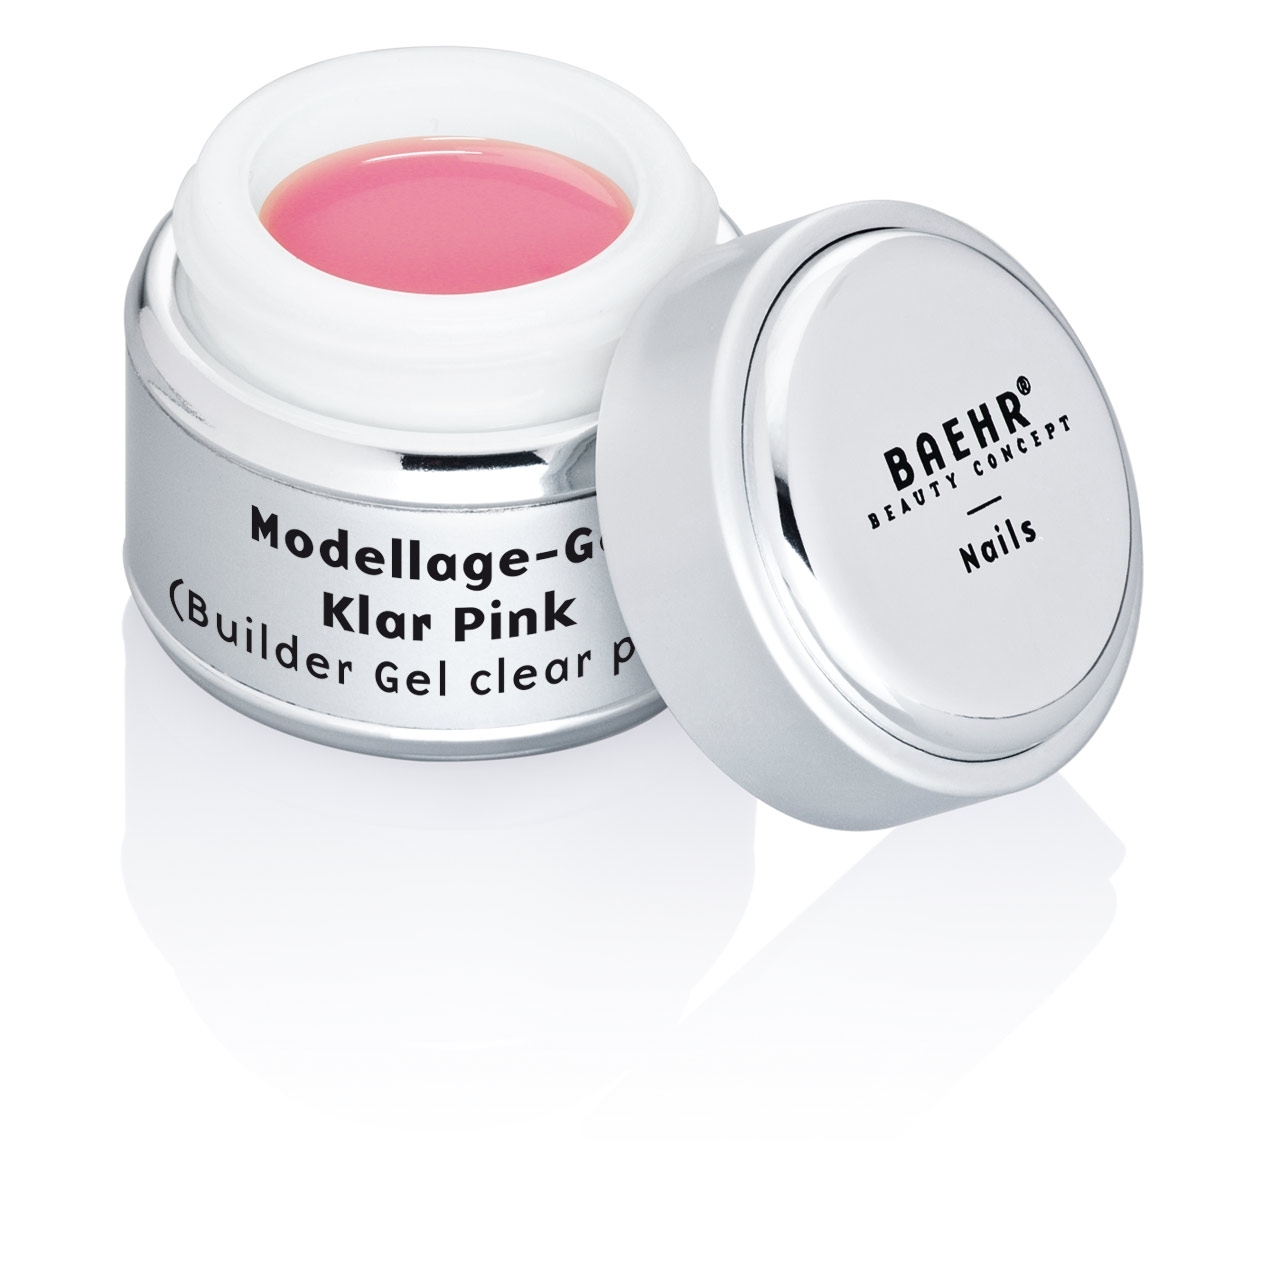 BAEHR BEAUTY CONCEPT - NAILS Modellage-Gel Klar Pink 5 ml